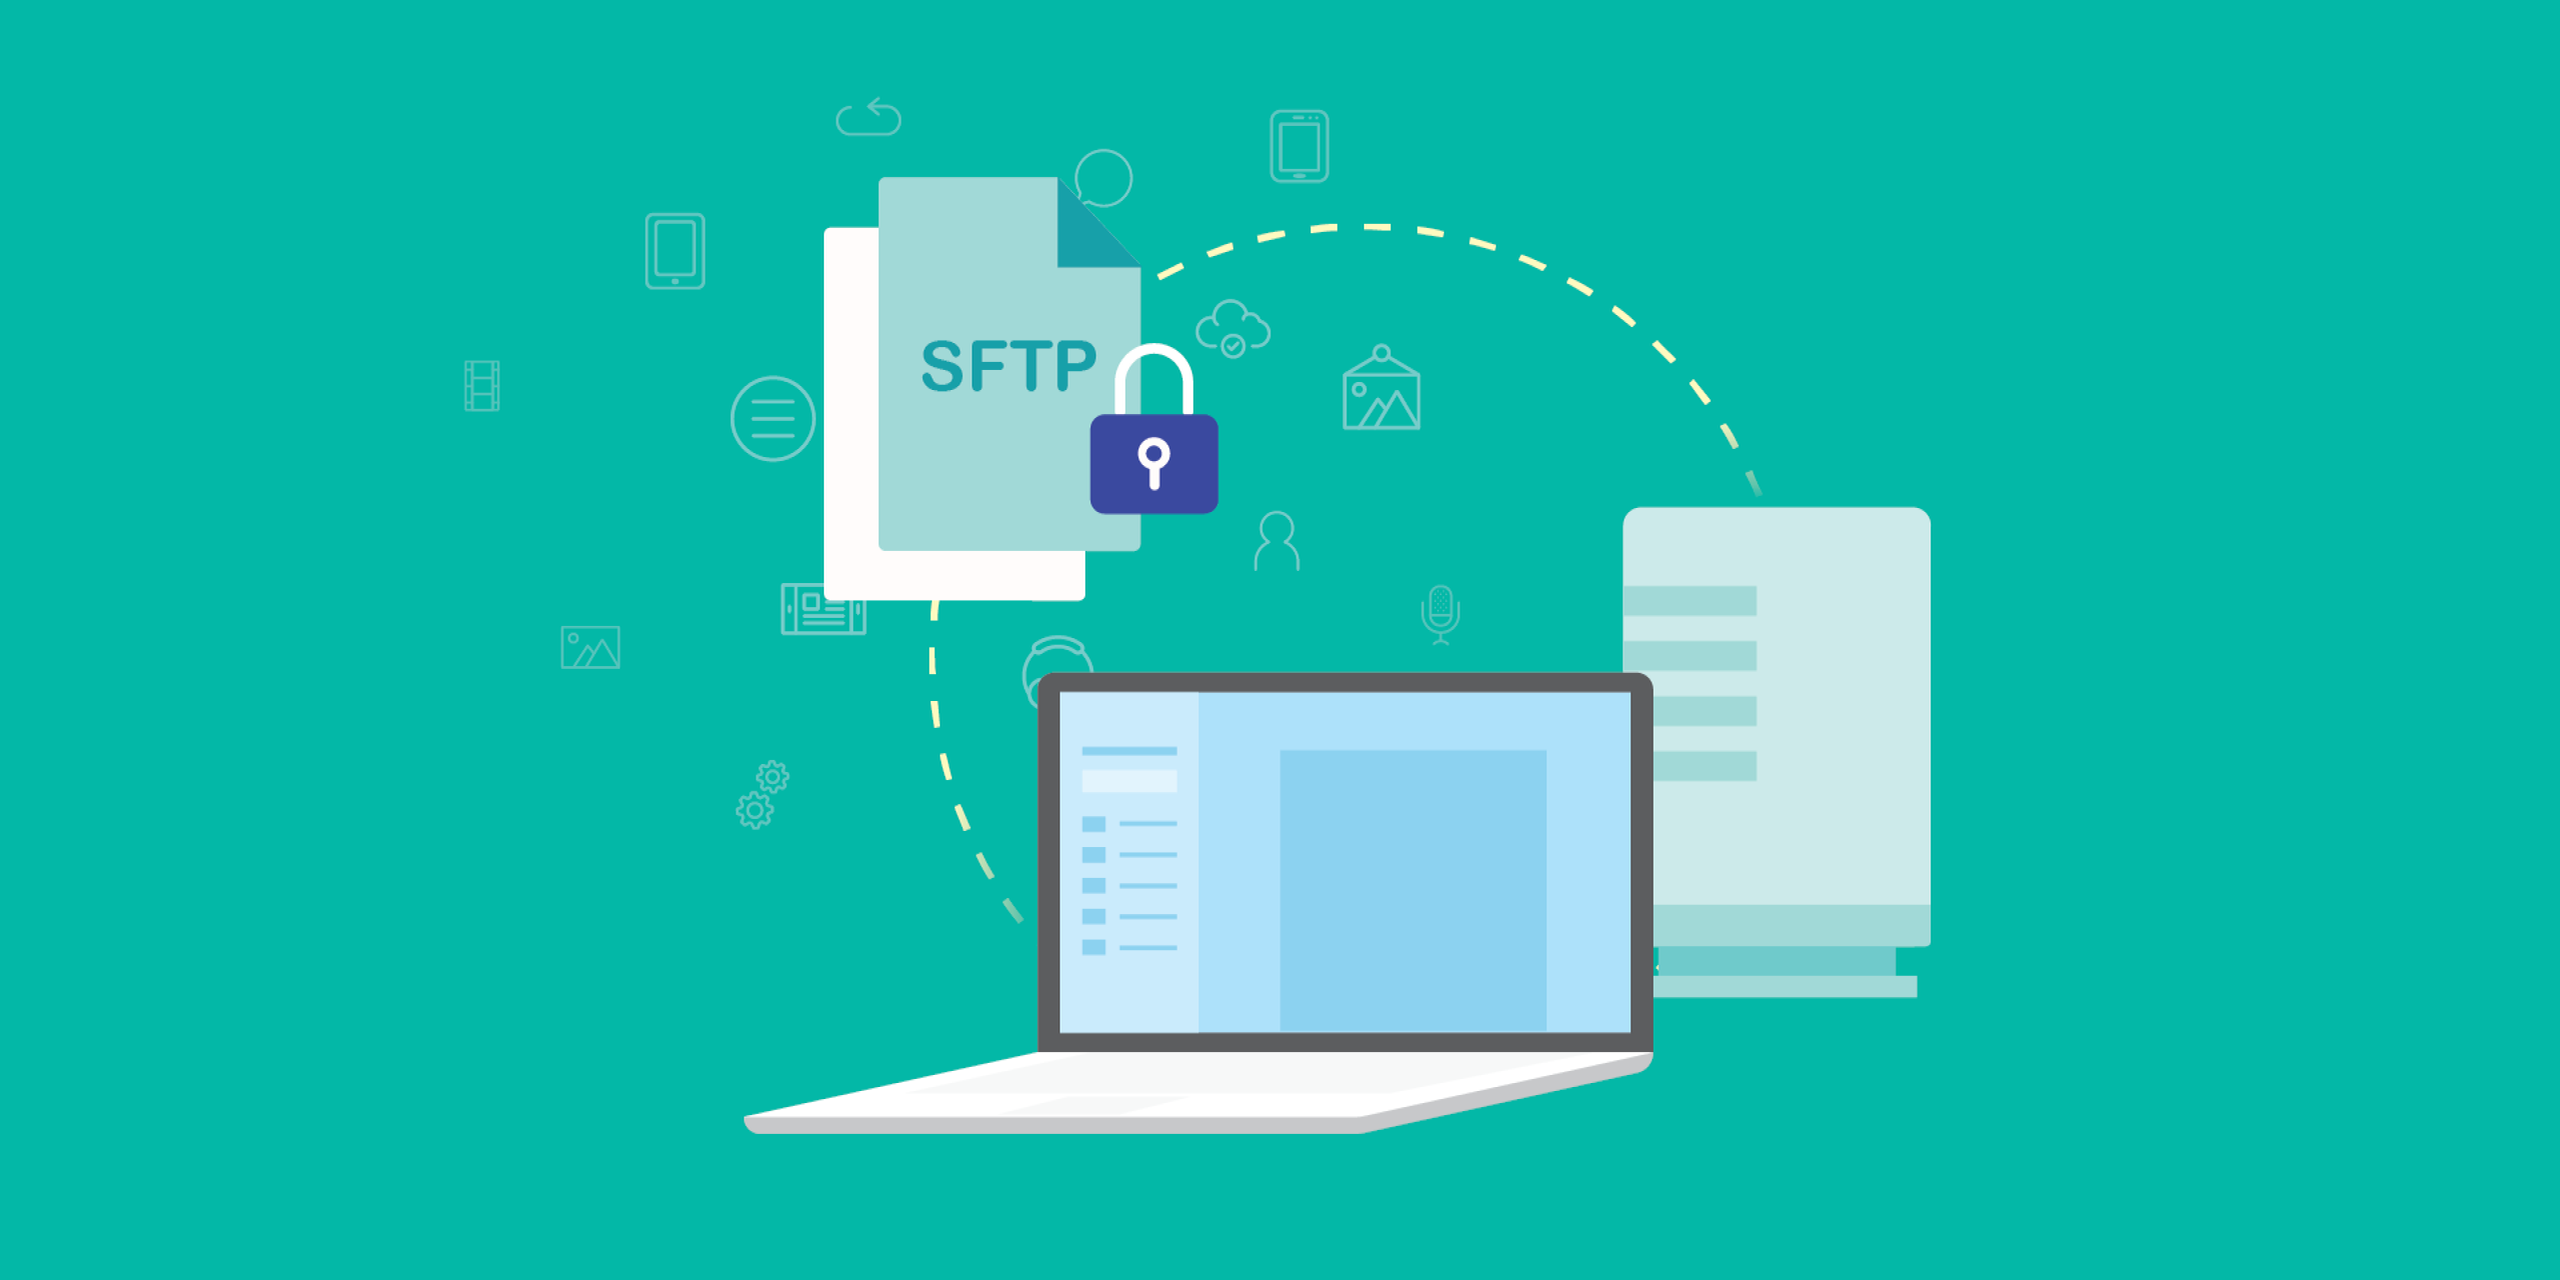 secure file transfer protocol (sftp)